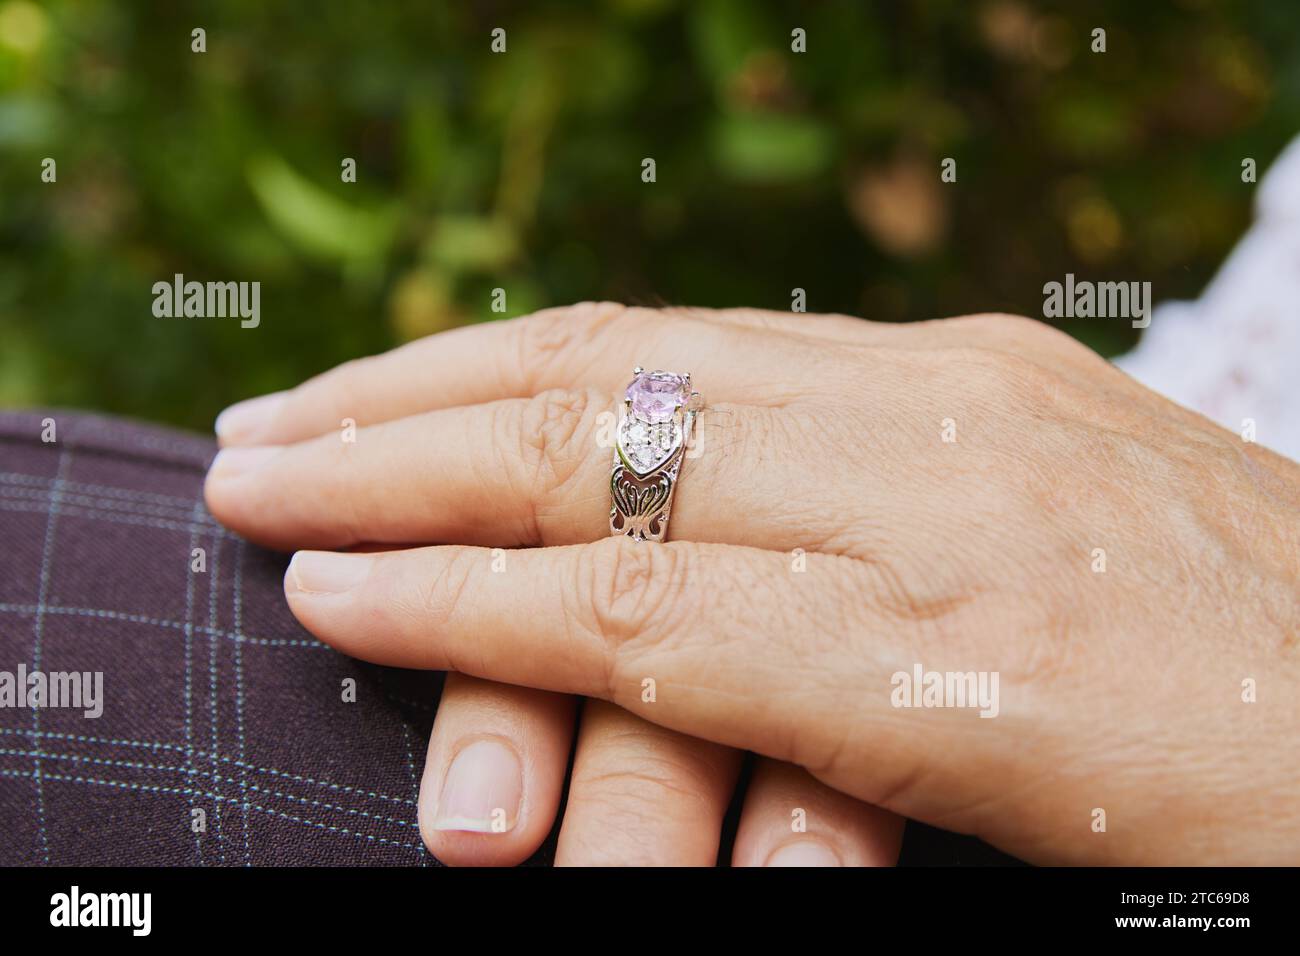 Round Salt and Pepper Diamond Engagement Ring - Aurelius Jewelry